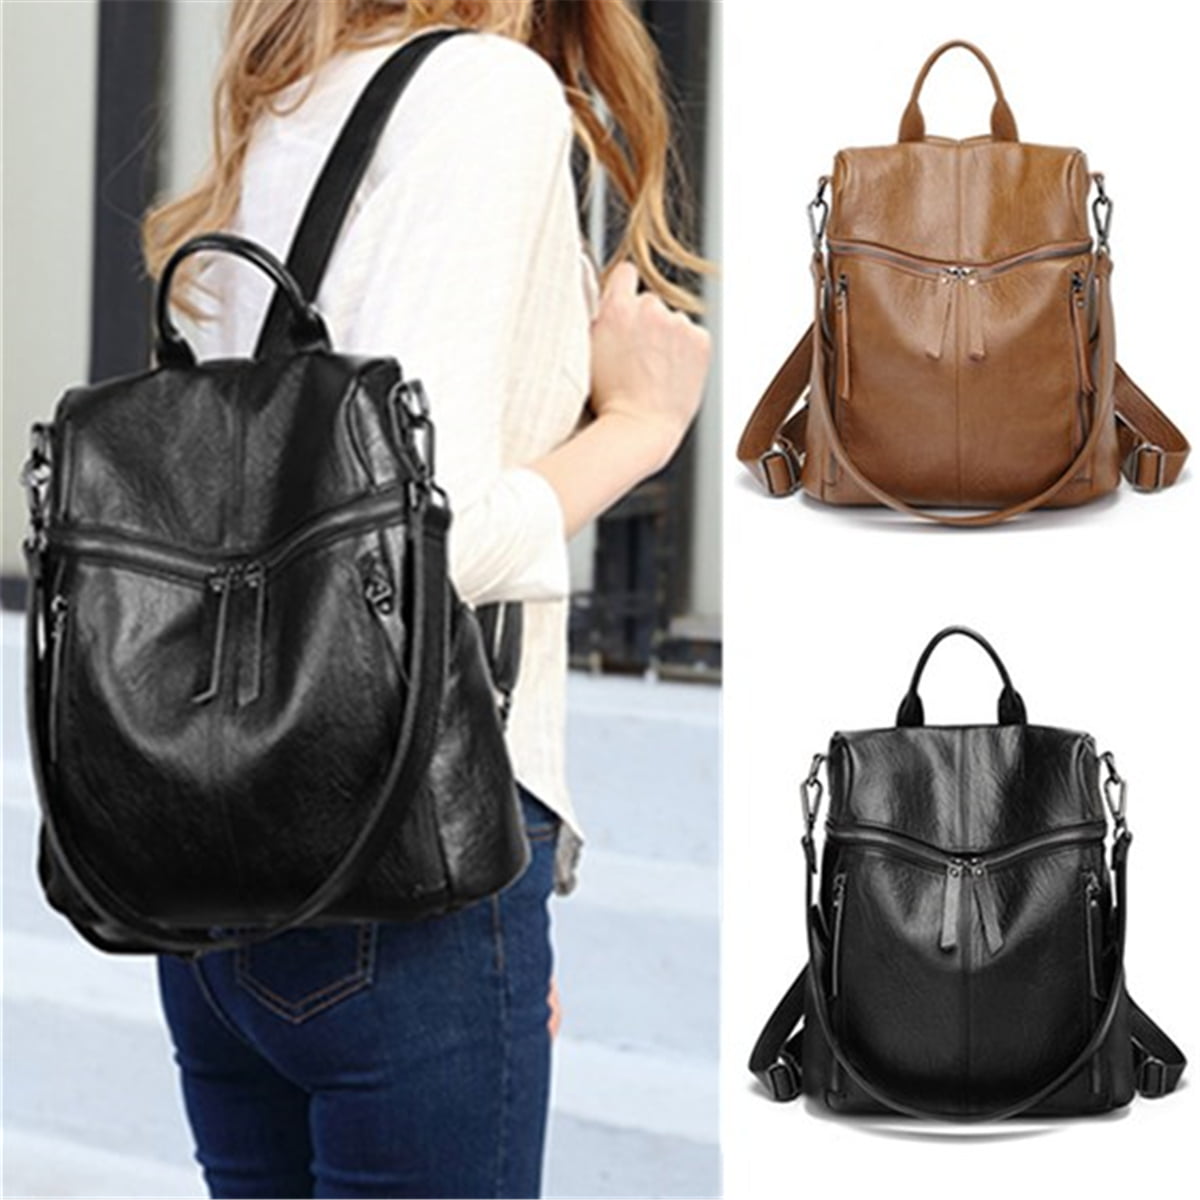 Women Genuine Leather Fashion Backpack Purse Black White Cow Travel School Shoulder Bag Girls Ladies Daypack Handbags 